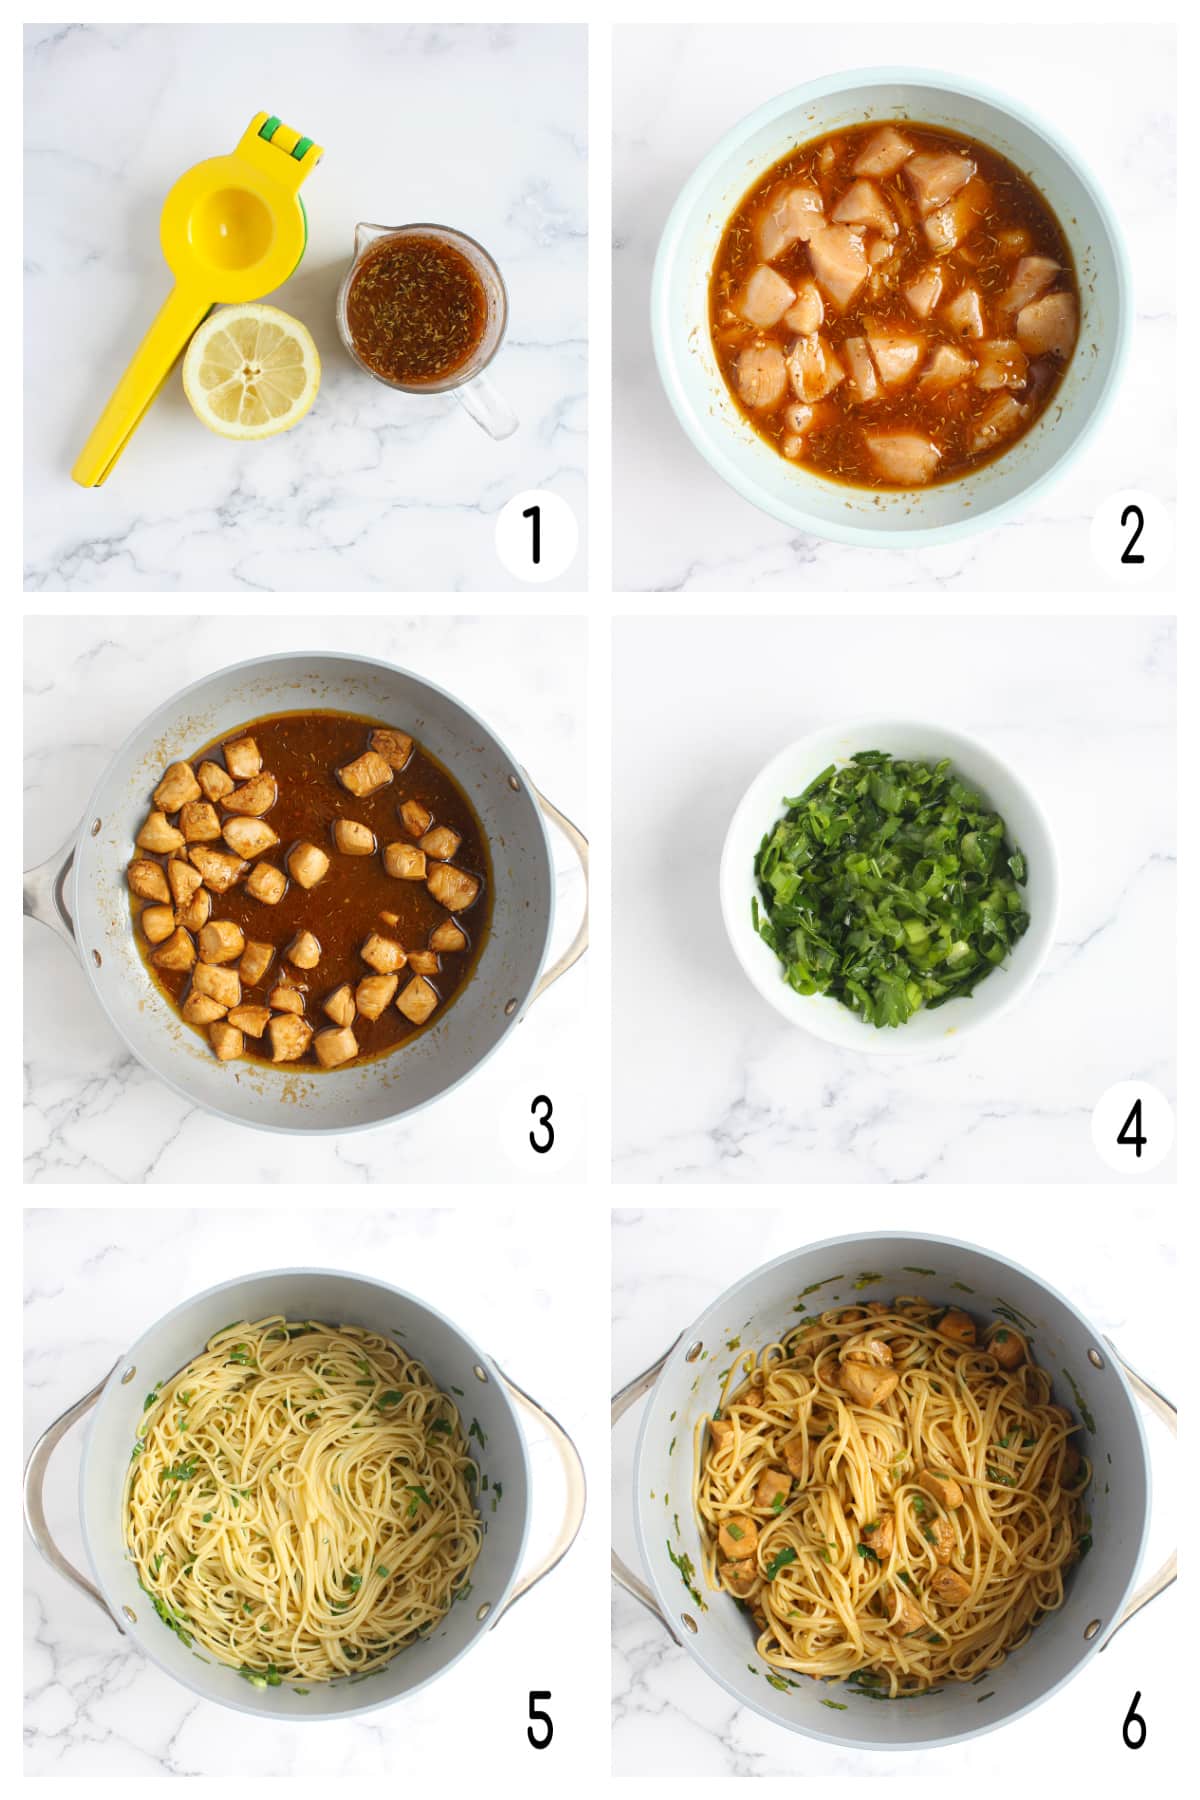 Process shots showing how to make lemon chicken pasta.